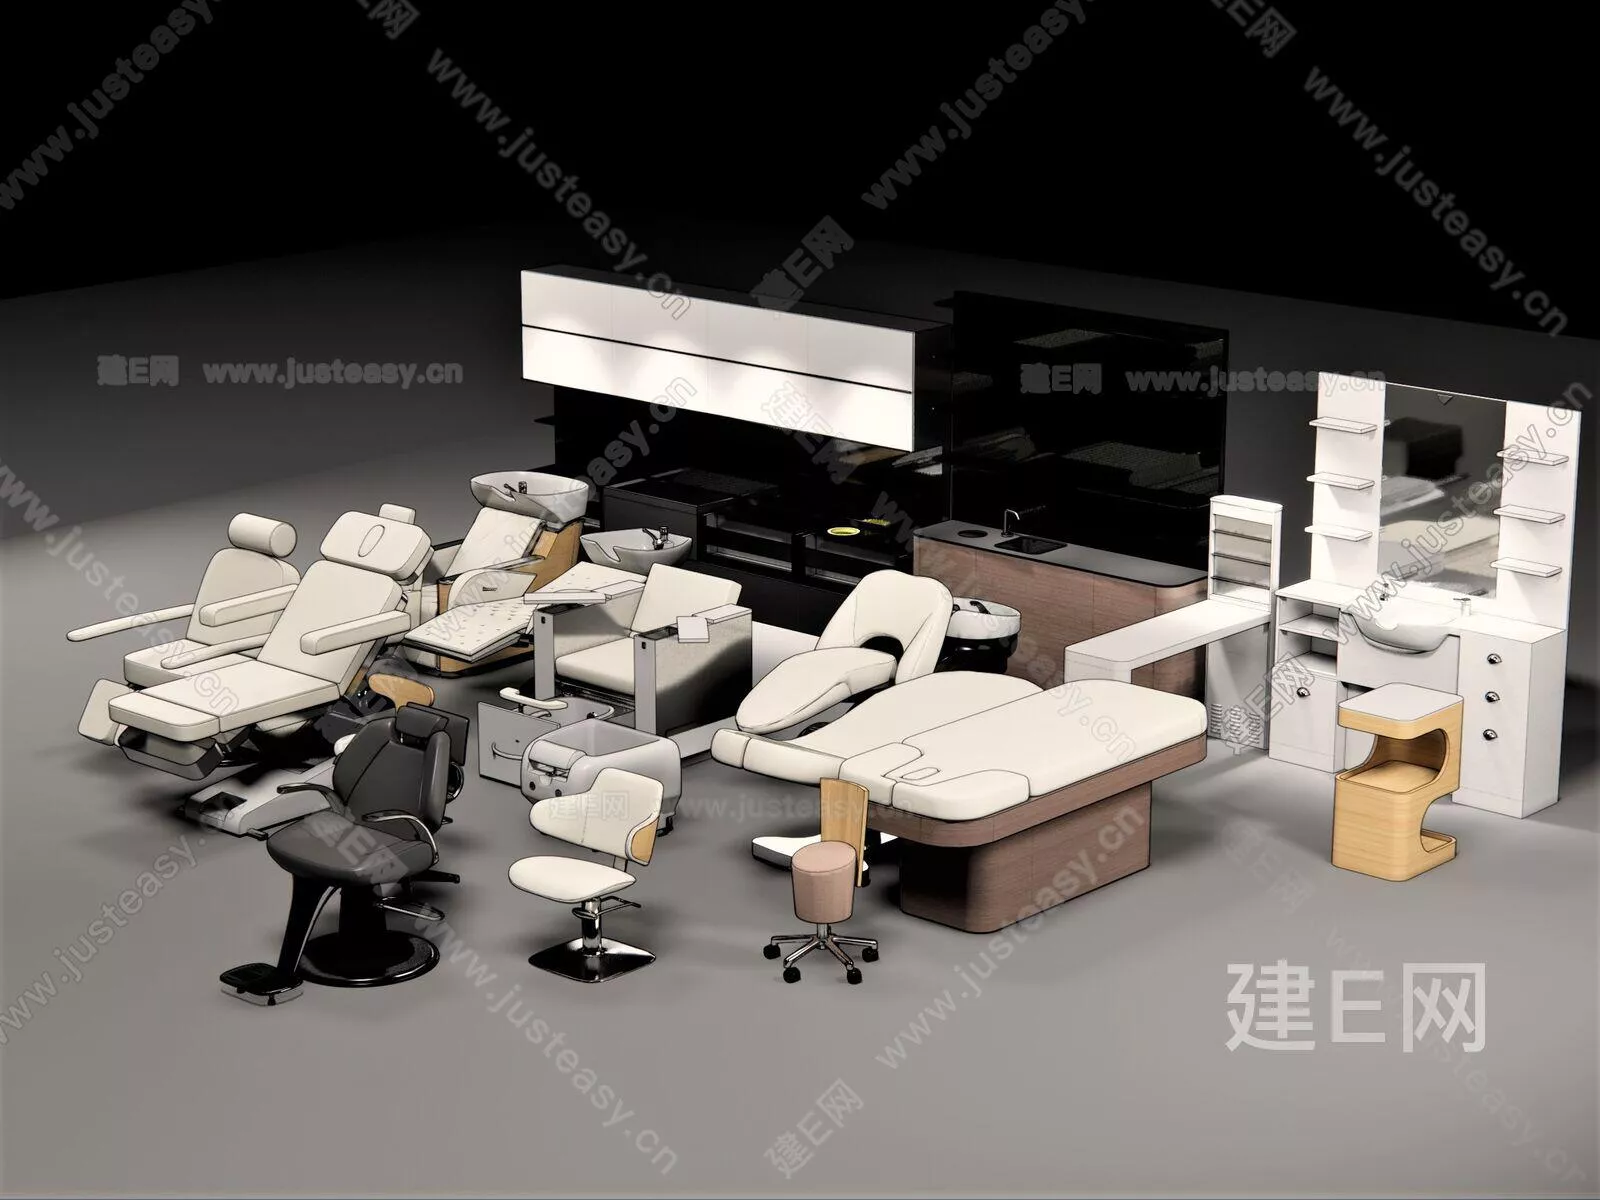 MODERN OFFICE CHAIR - SKETCHUP 3D MODEL - ENSCAPE - 116408757